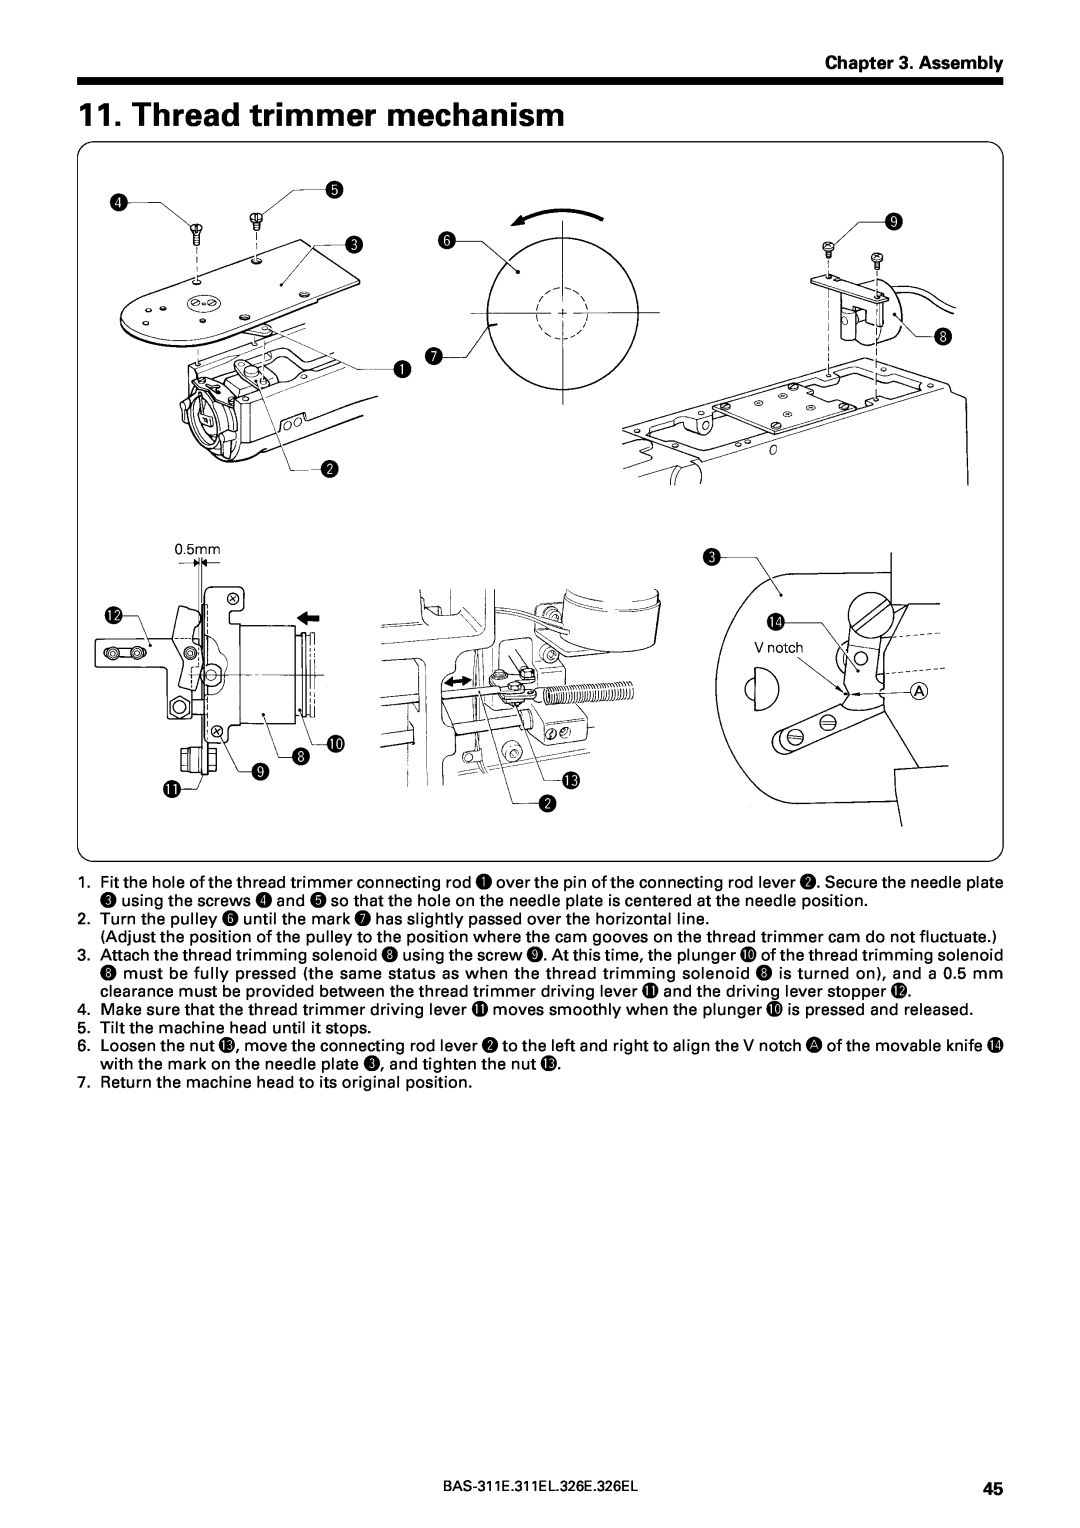 Brother BAS-311E service manual Thread trimmer mechanism, Assembly, t o e y i q u, i !0 